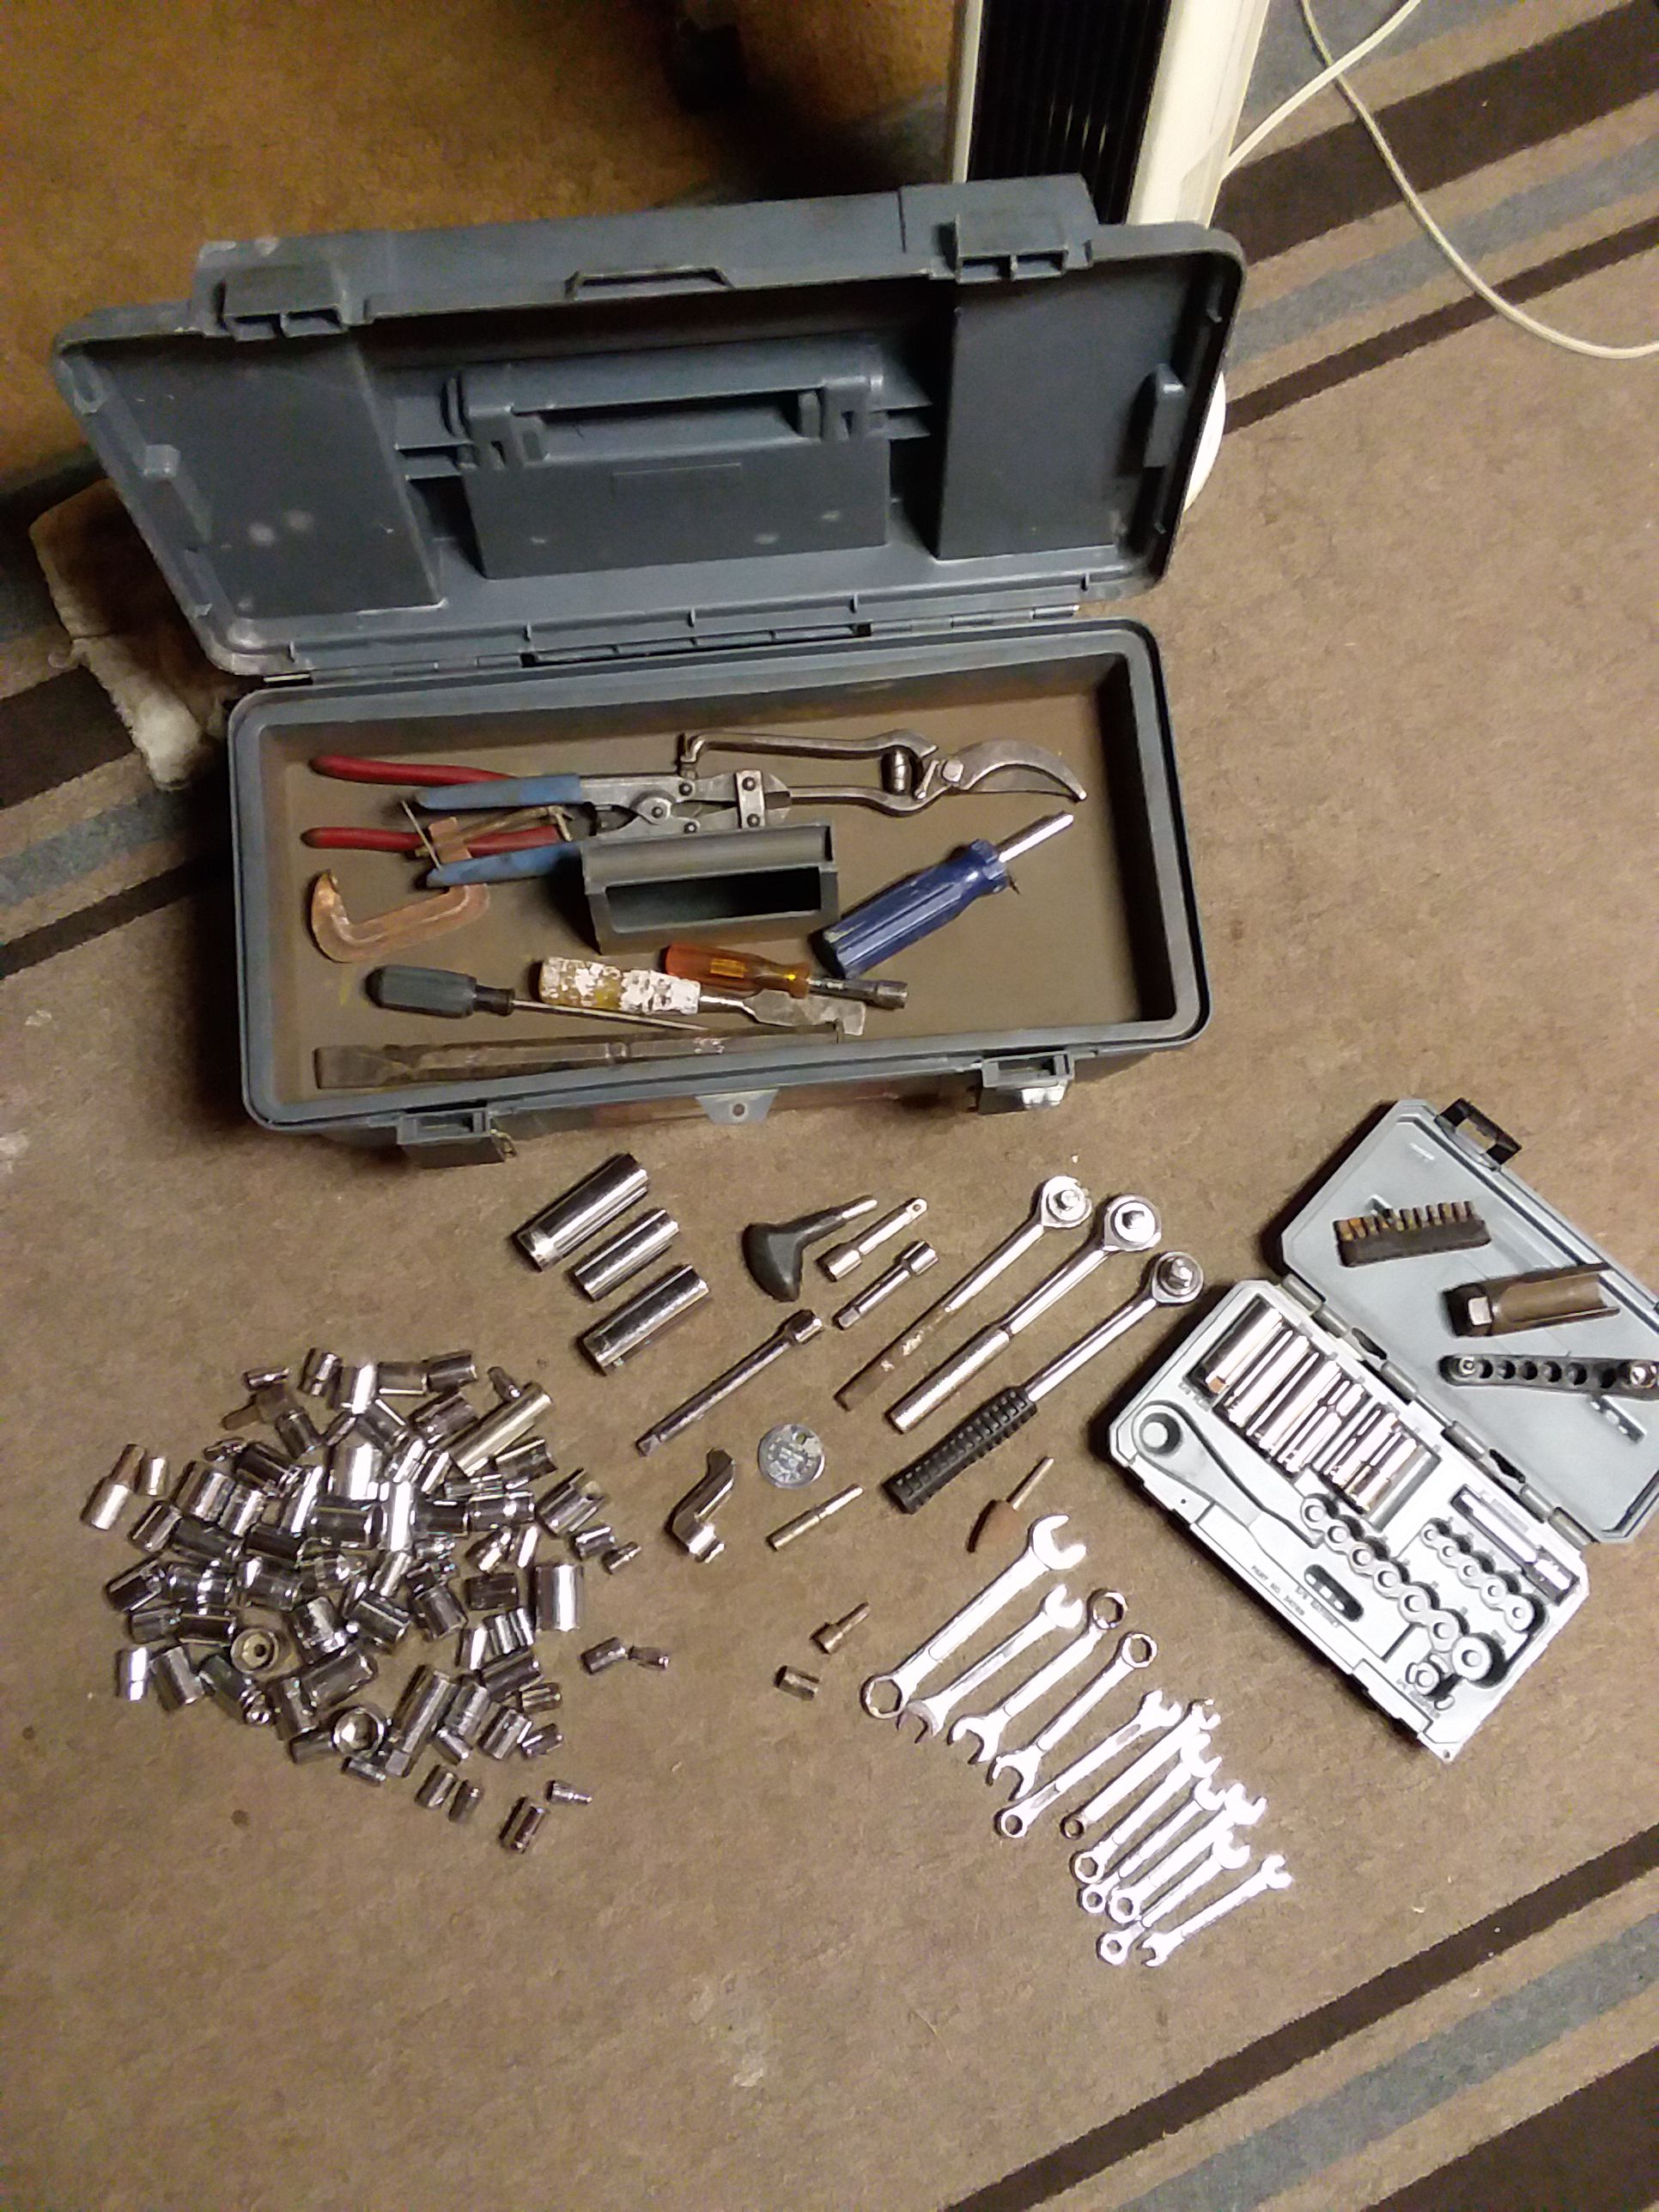 Tool box full of tools, sockets